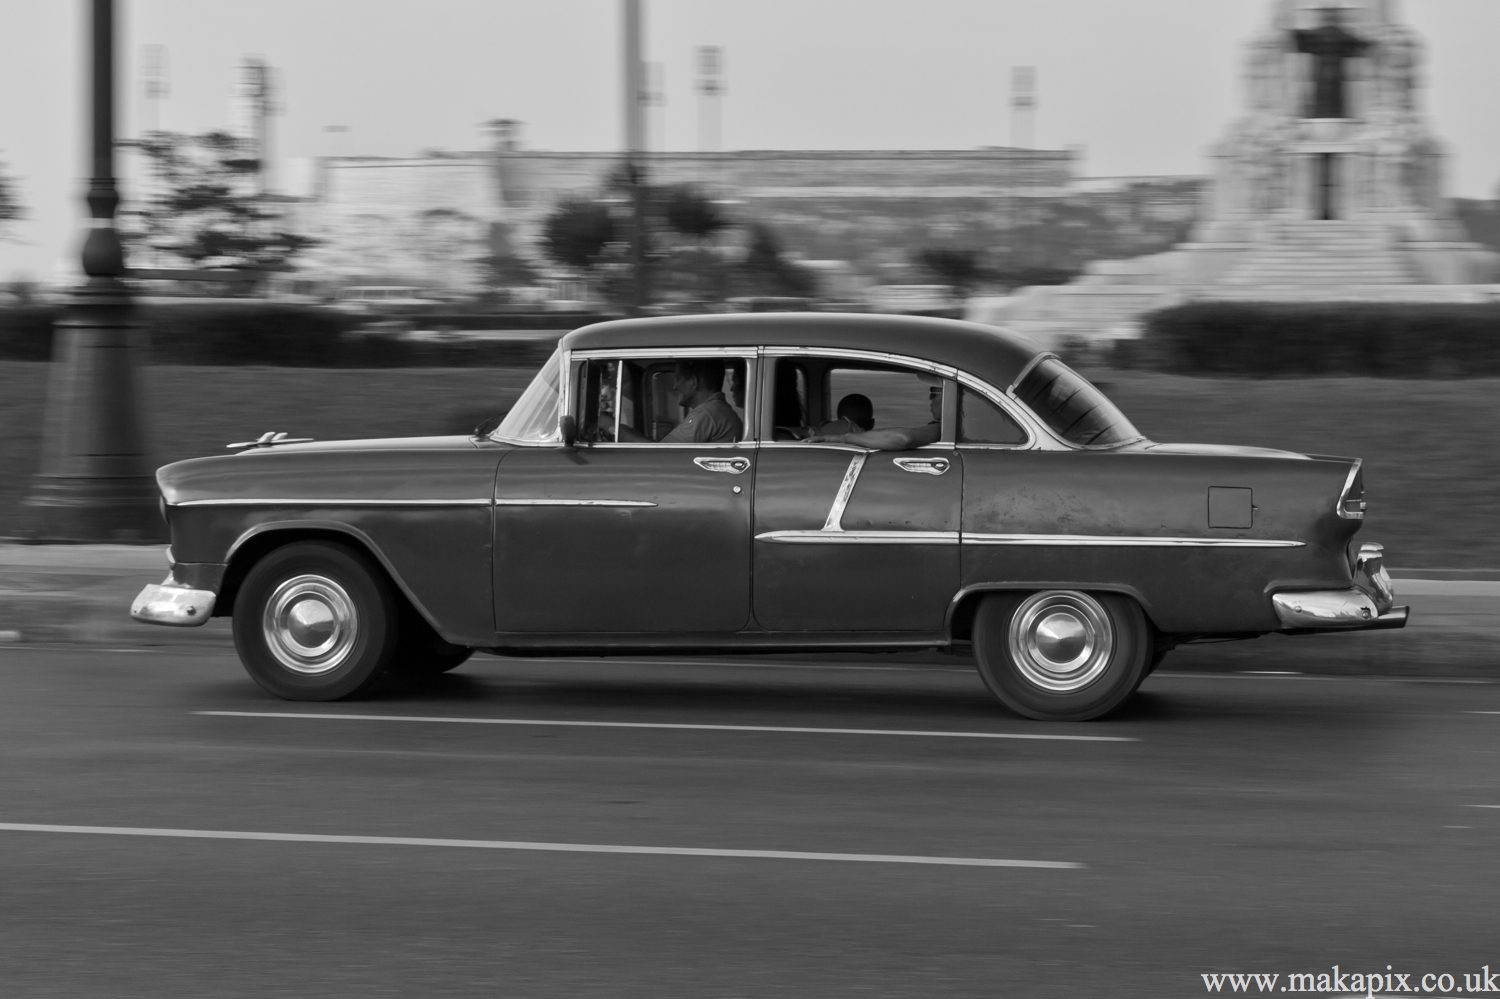 La Habana, cars ,cars, cars...